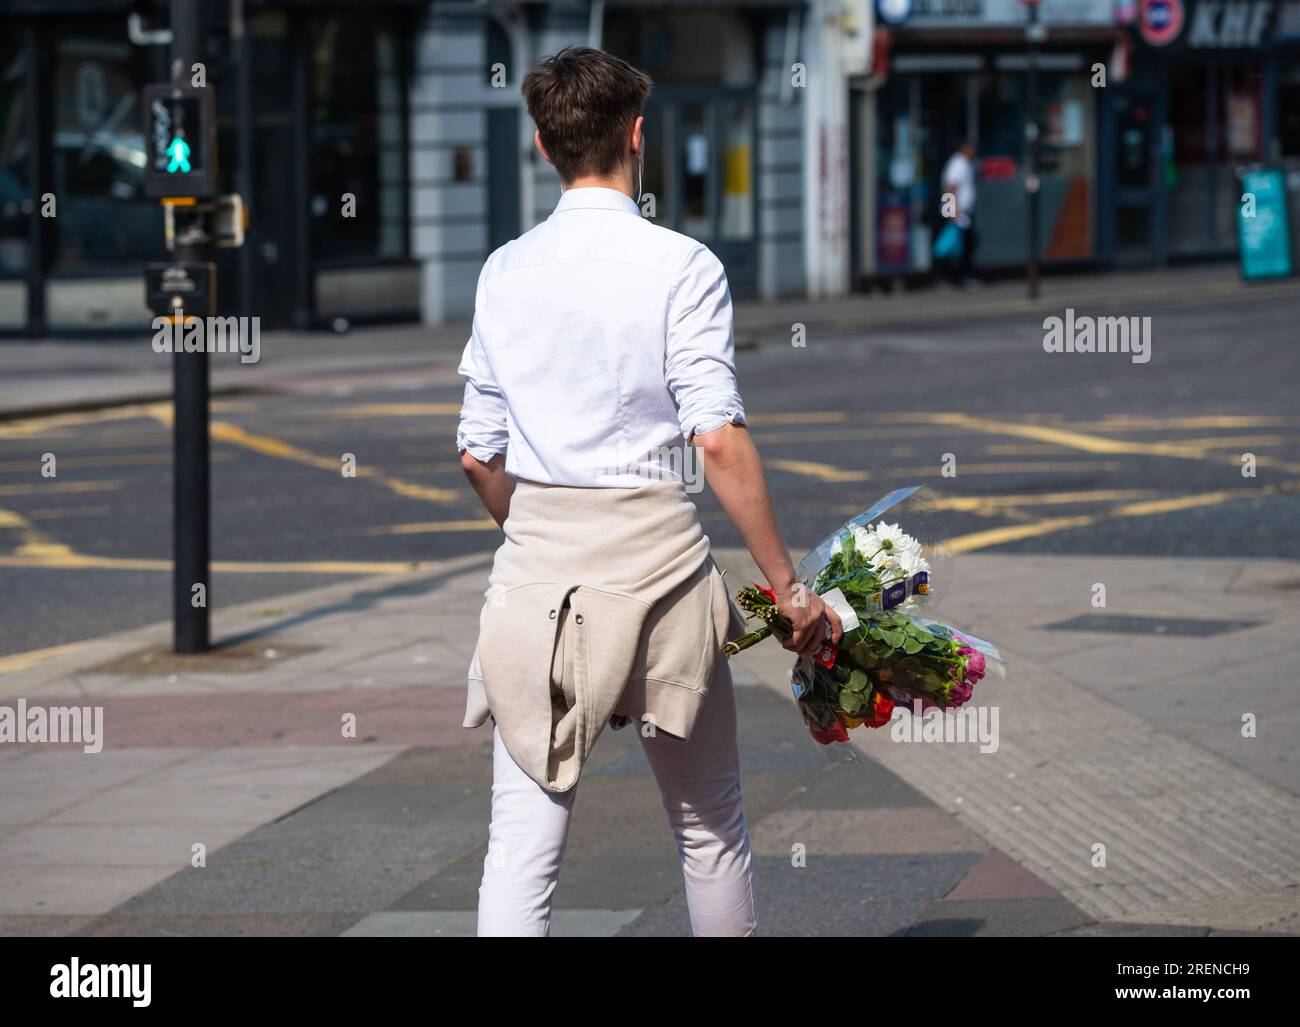 Hombre joven caminando, ciudad, verano, llevando, ramo de flores, Inglaterra, Reino Unido. Concepto de amor, concepto romántico, romance, amor joven. Ramo de flores. Foto de stock